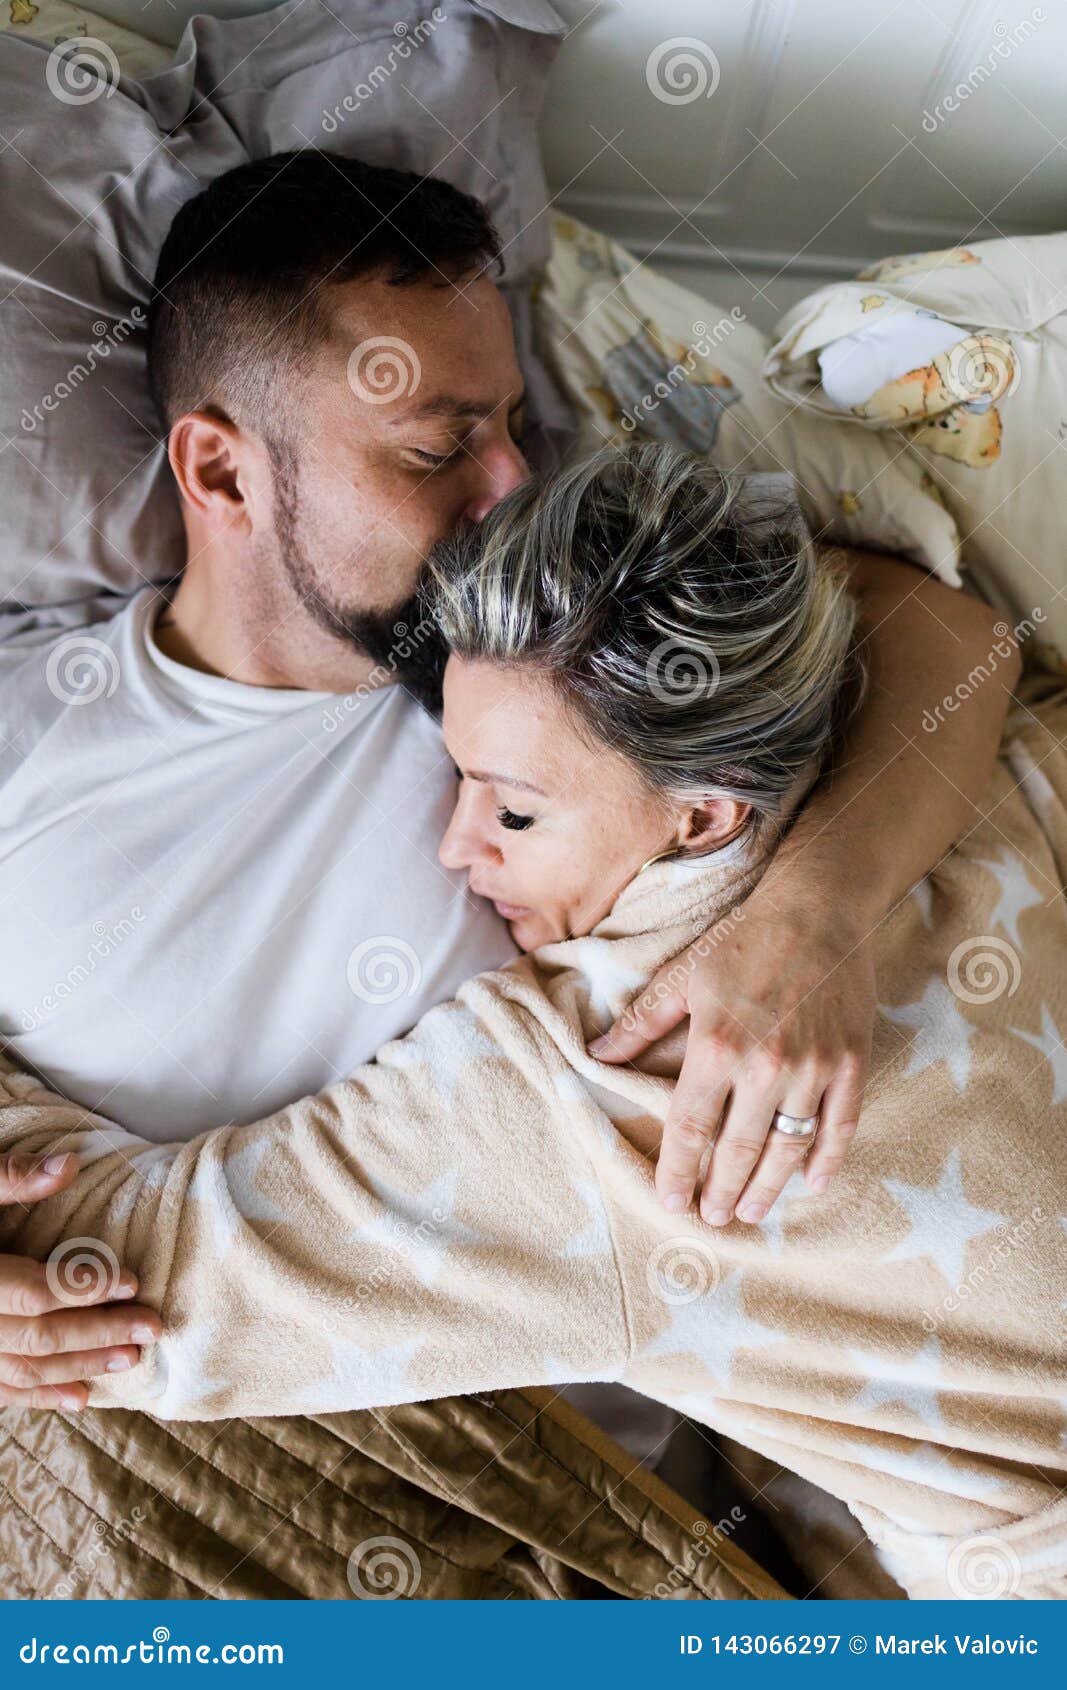 arvin madriaga share sleeping wife photos photos